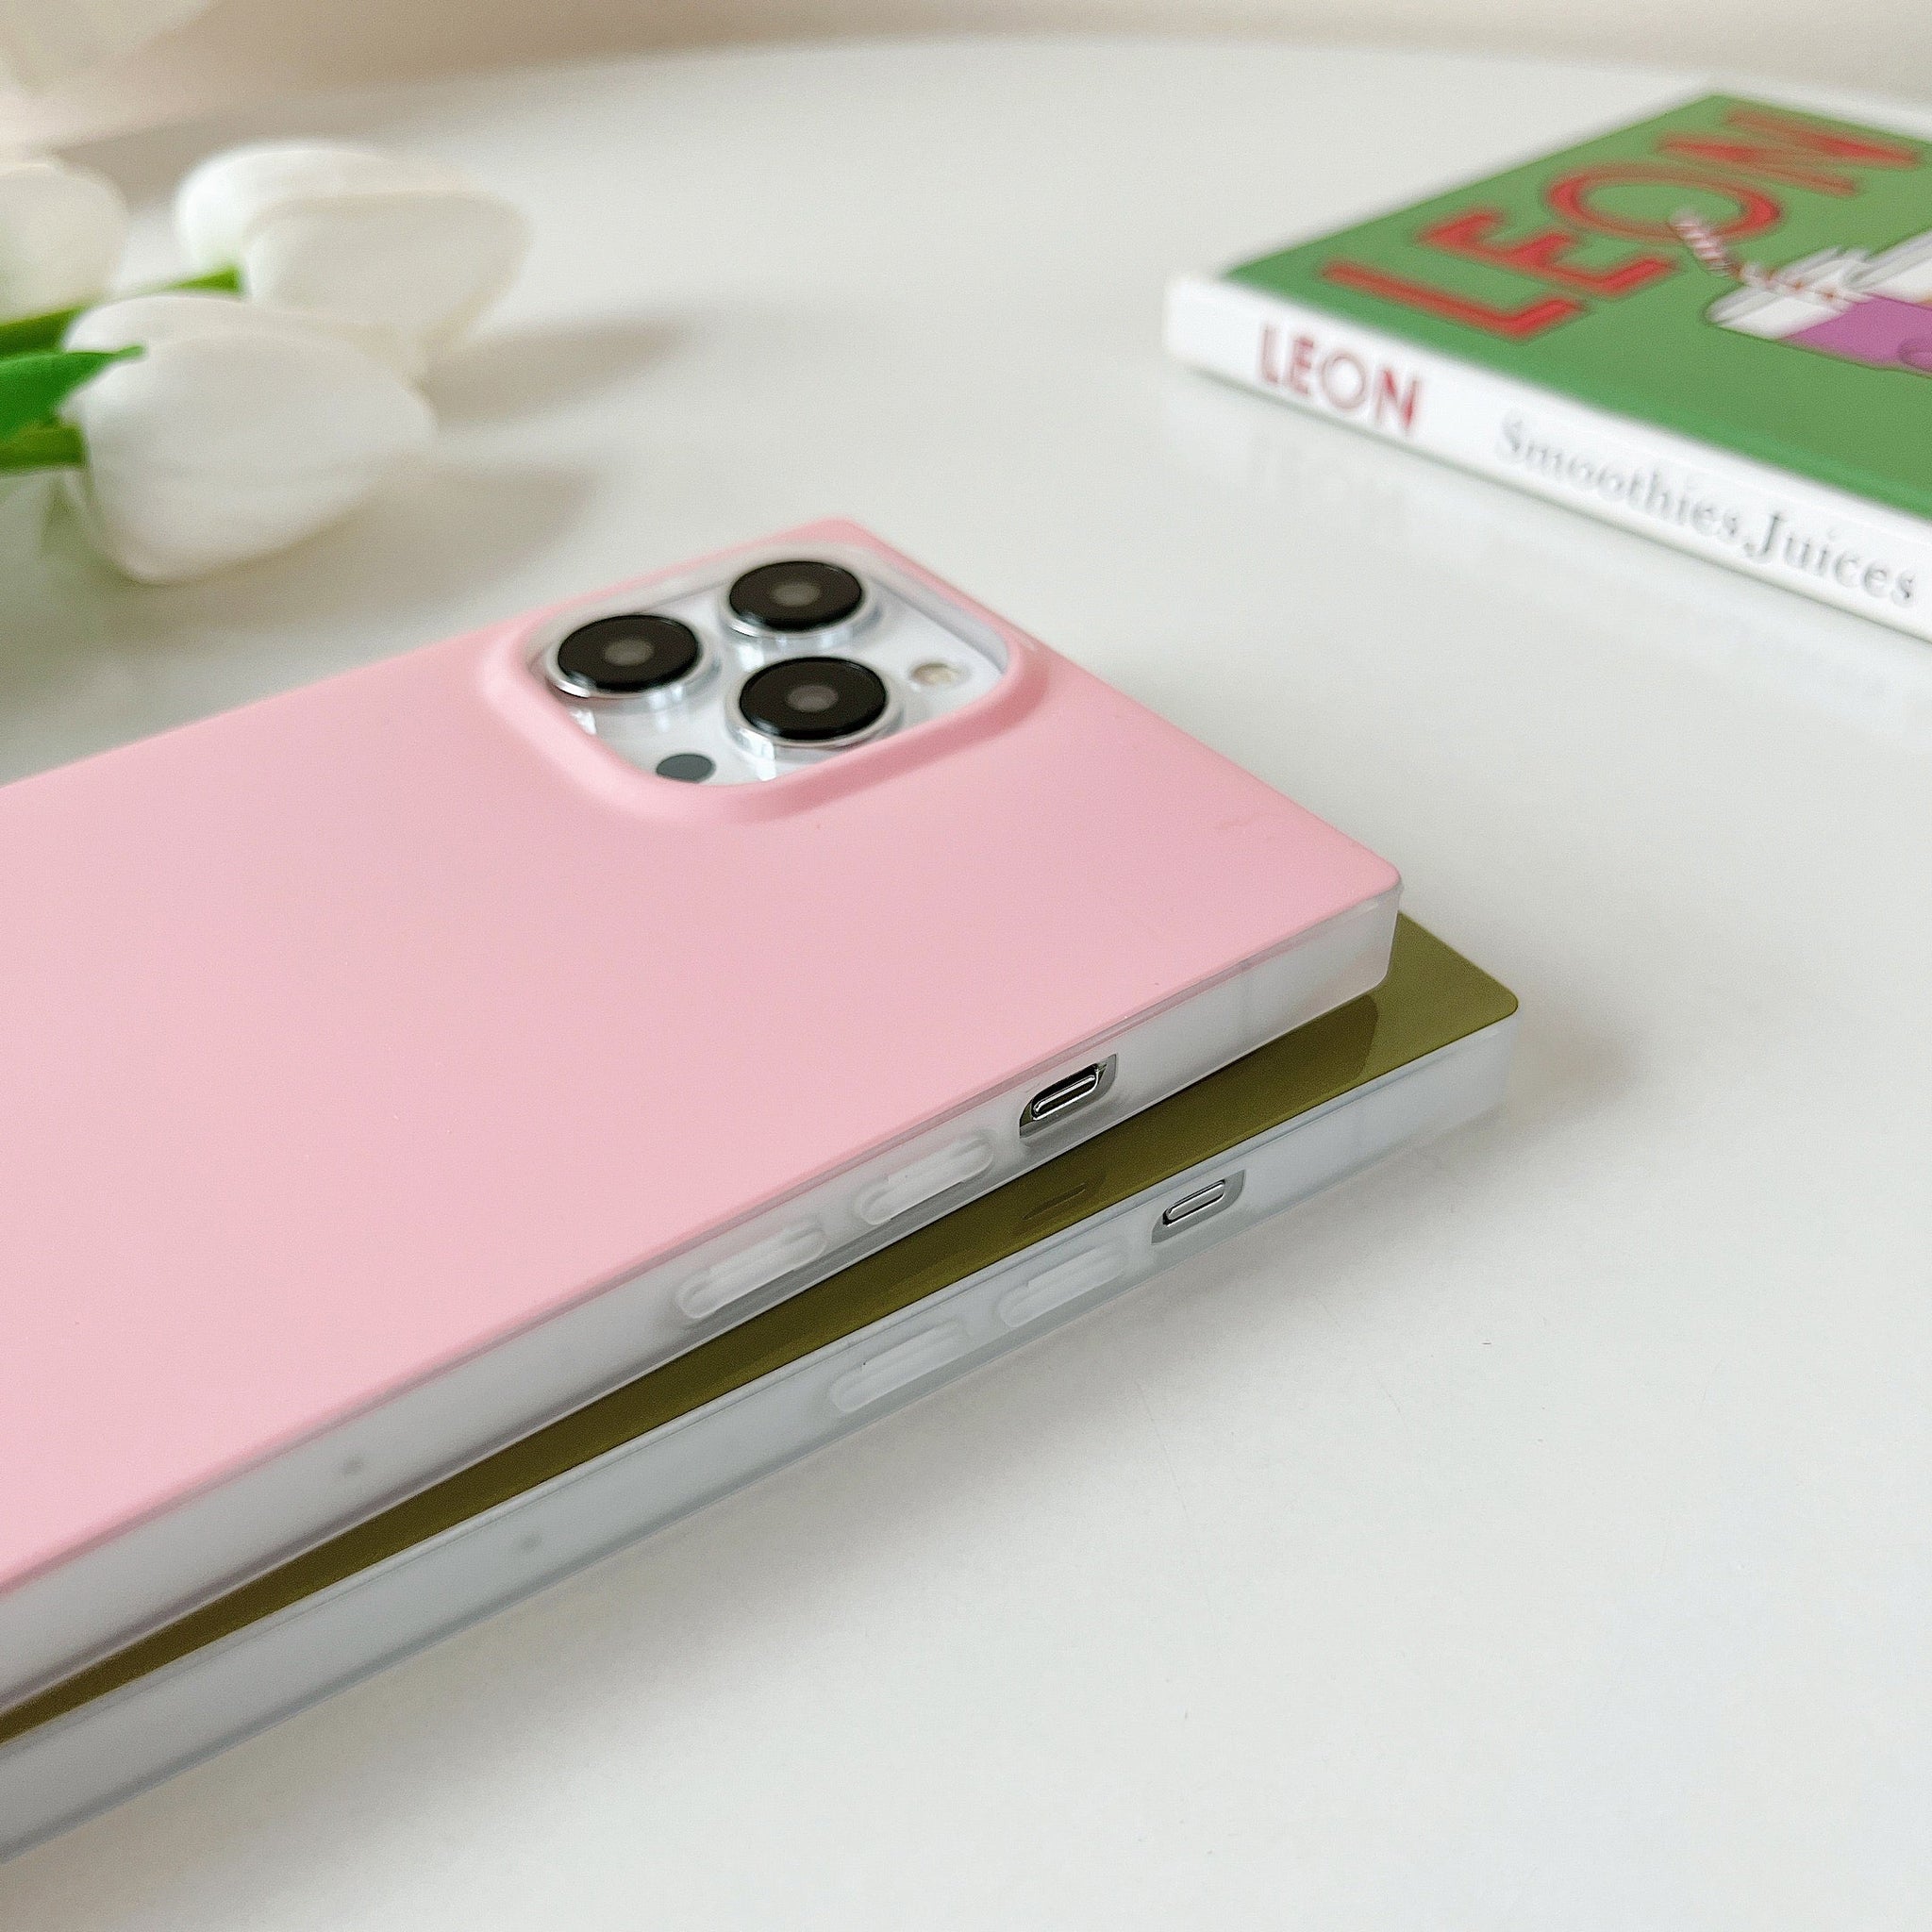 iPhone 12/12 Pro Case Square Pastel Plain Color (Baby Pink)